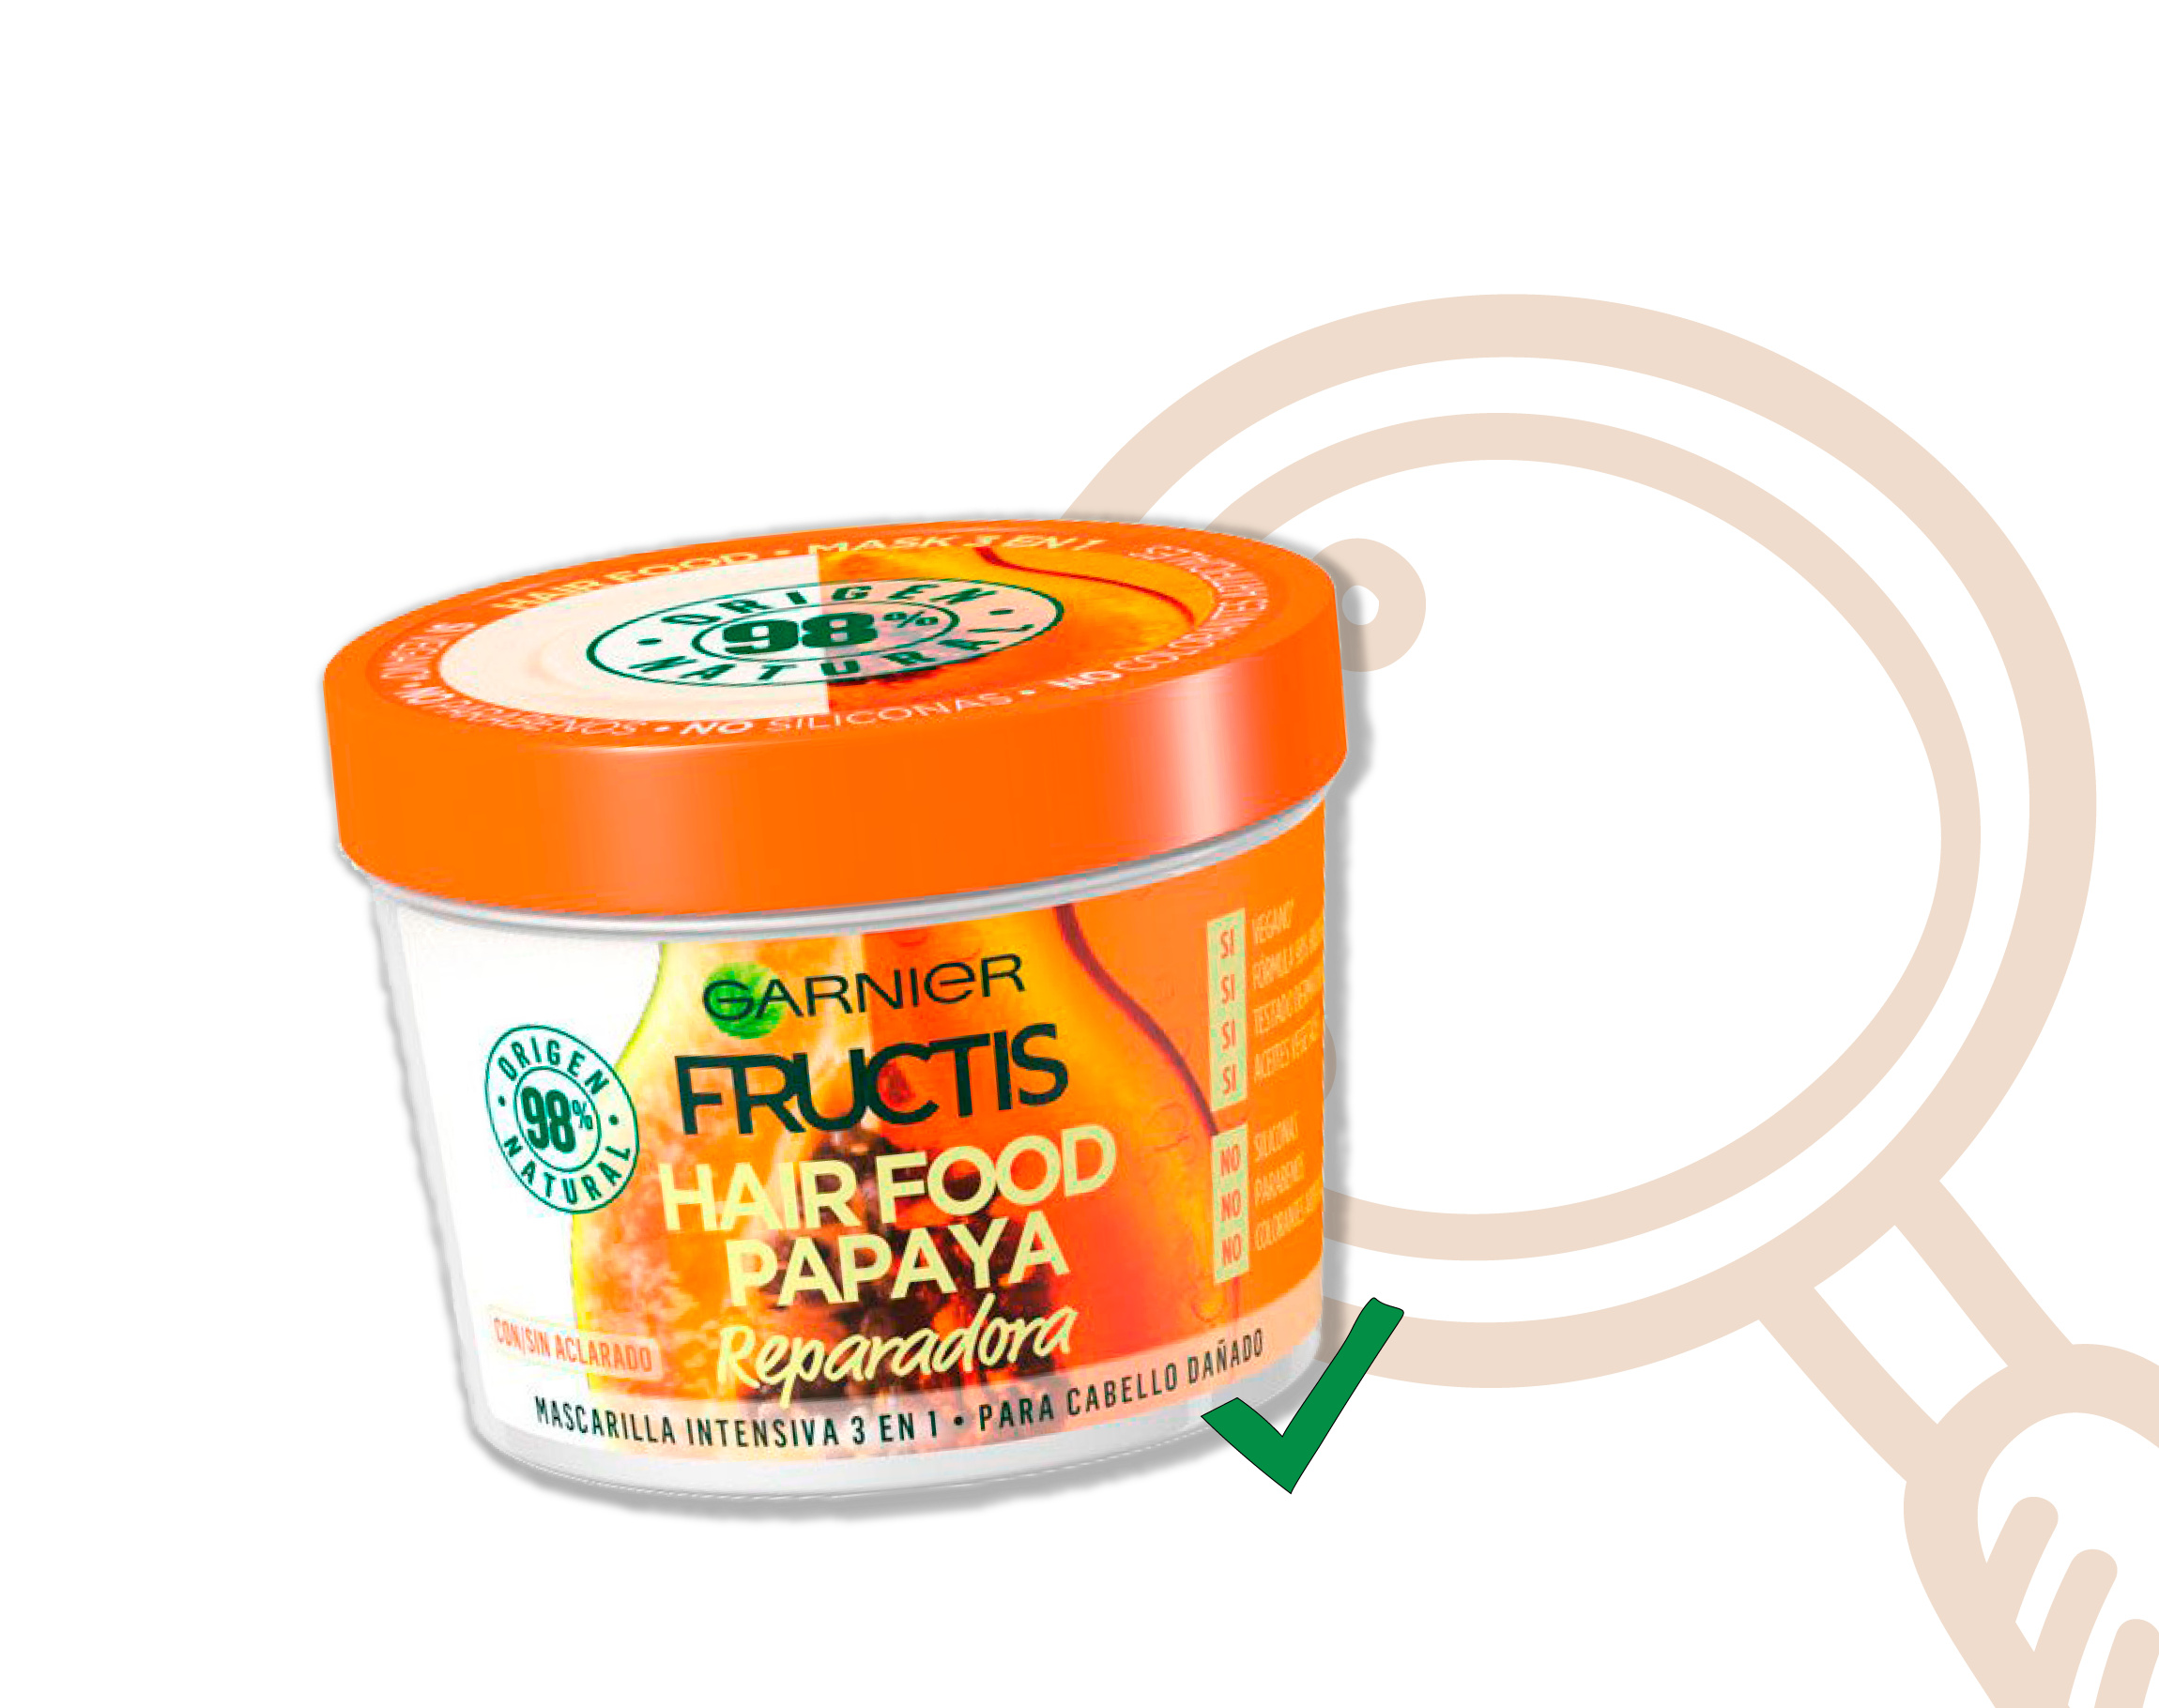 Analizamos Garnier Fructis Hair Food Papaya